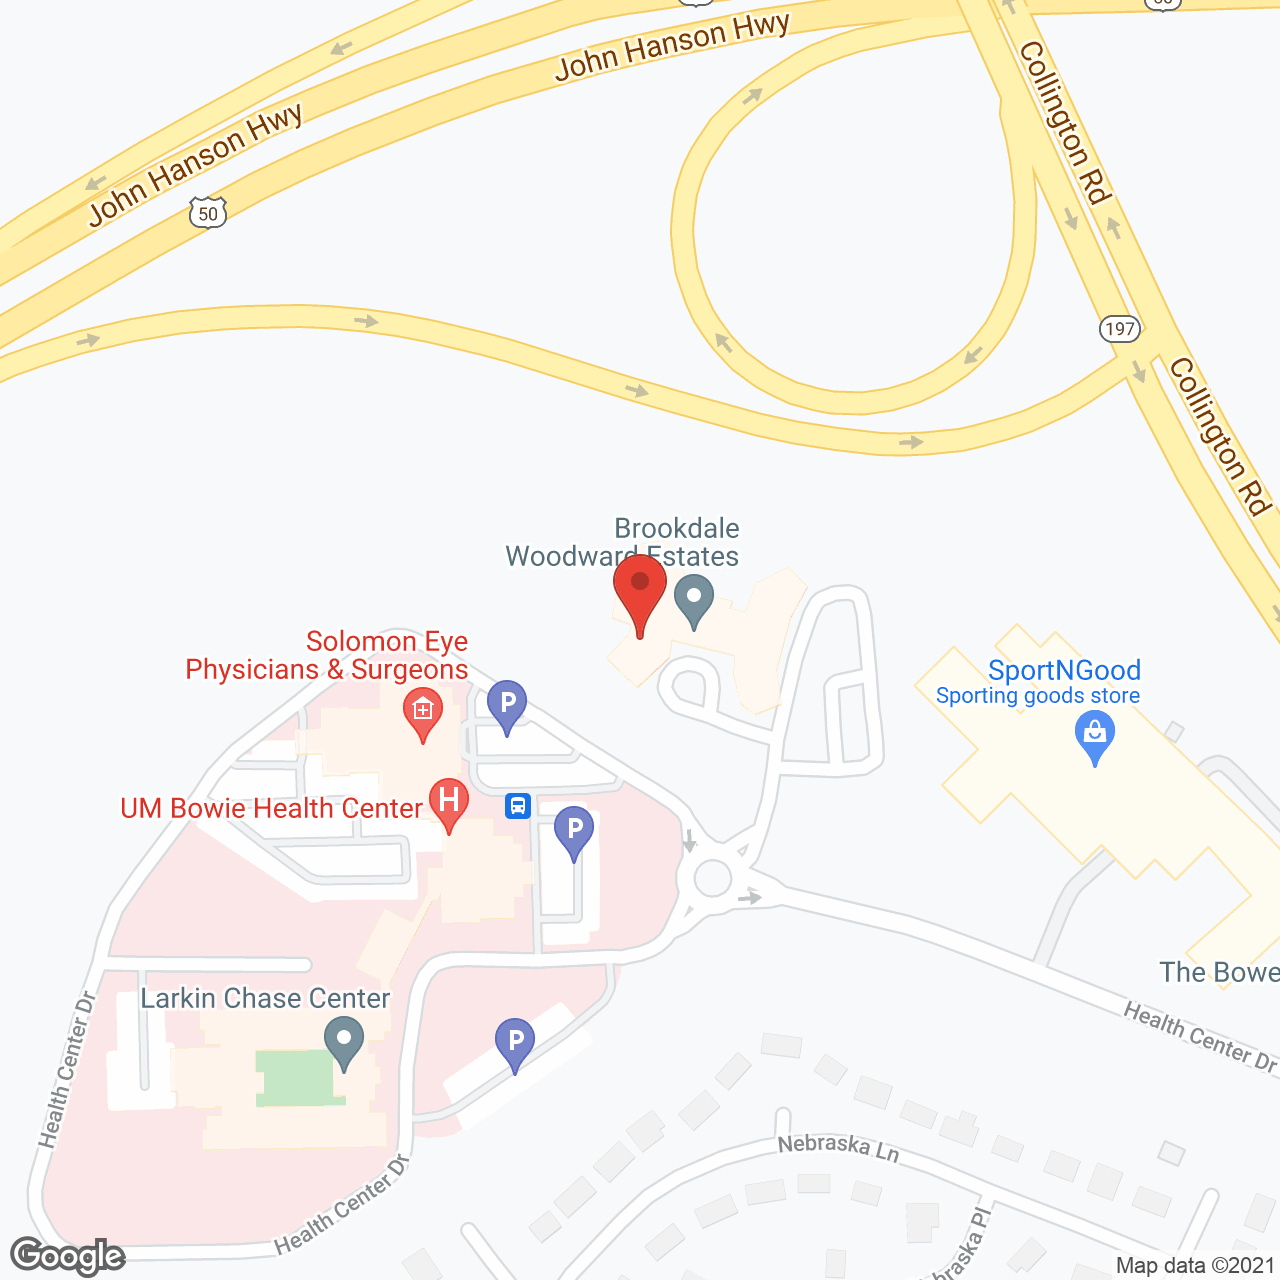 Woodward Estate in google map